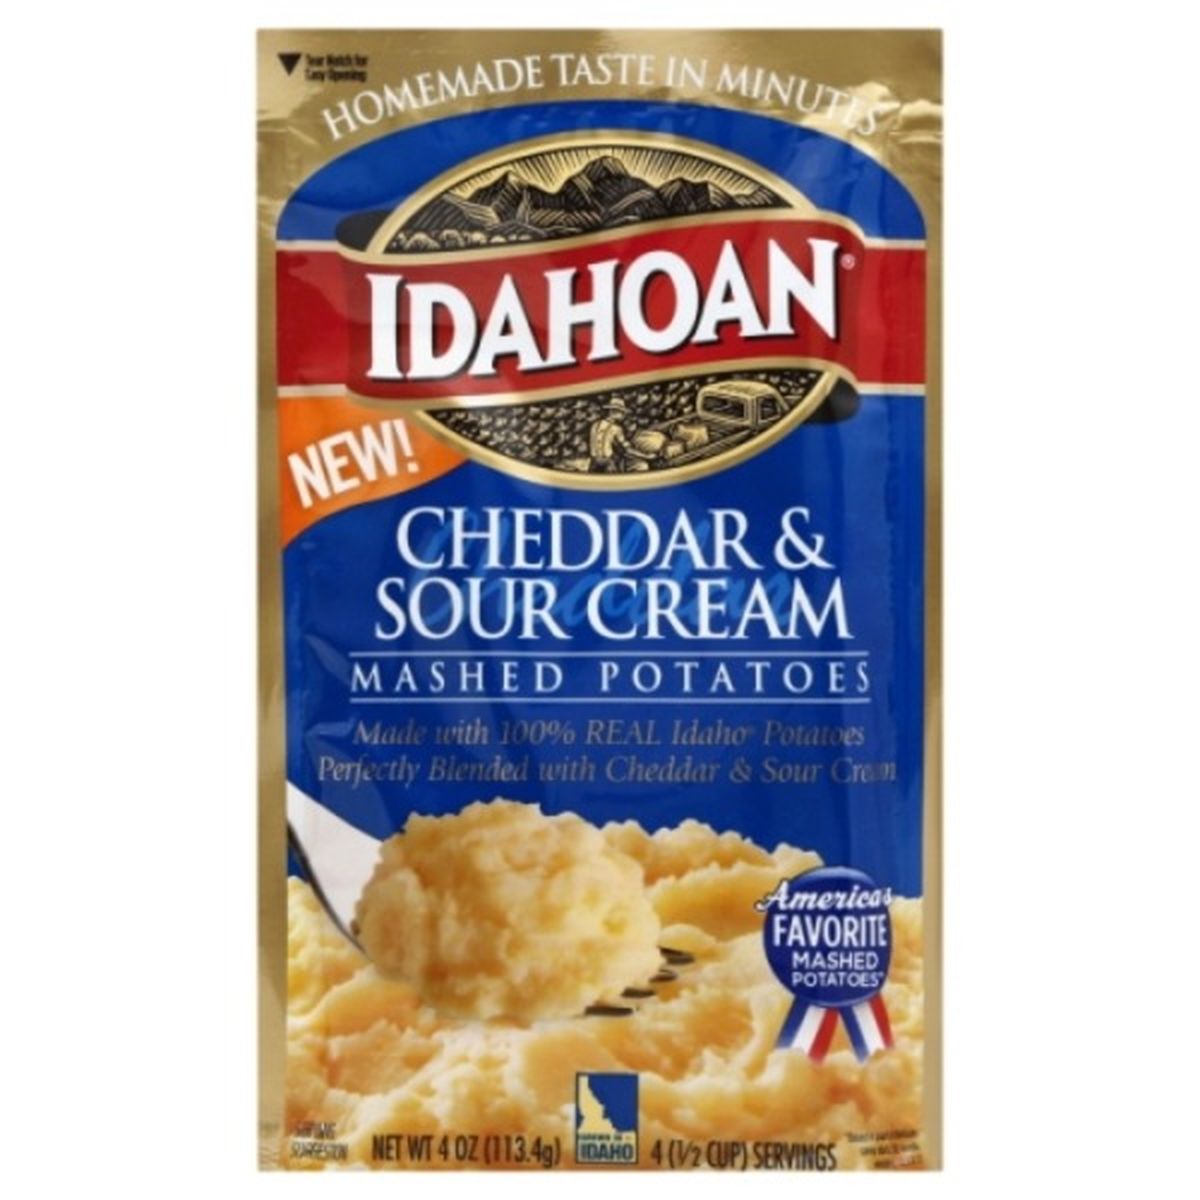 Calories in Idahoan Mashed Potatoes, Cheddar & Sour Cream